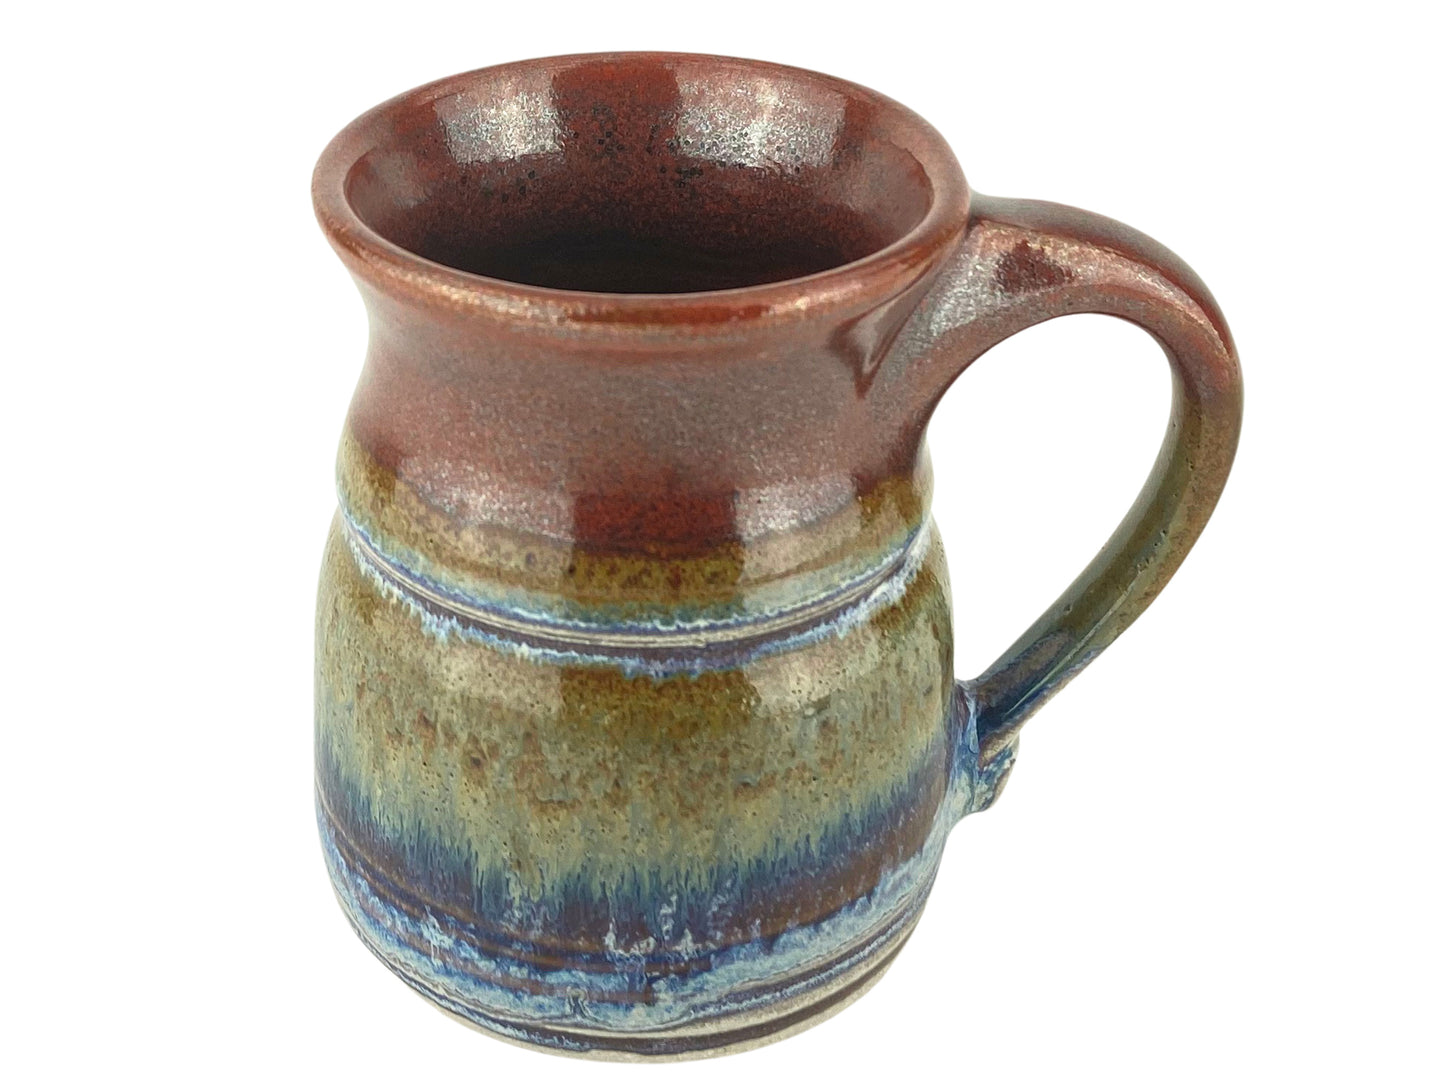 13 oz. Stoneware Coffee or Tea Mug